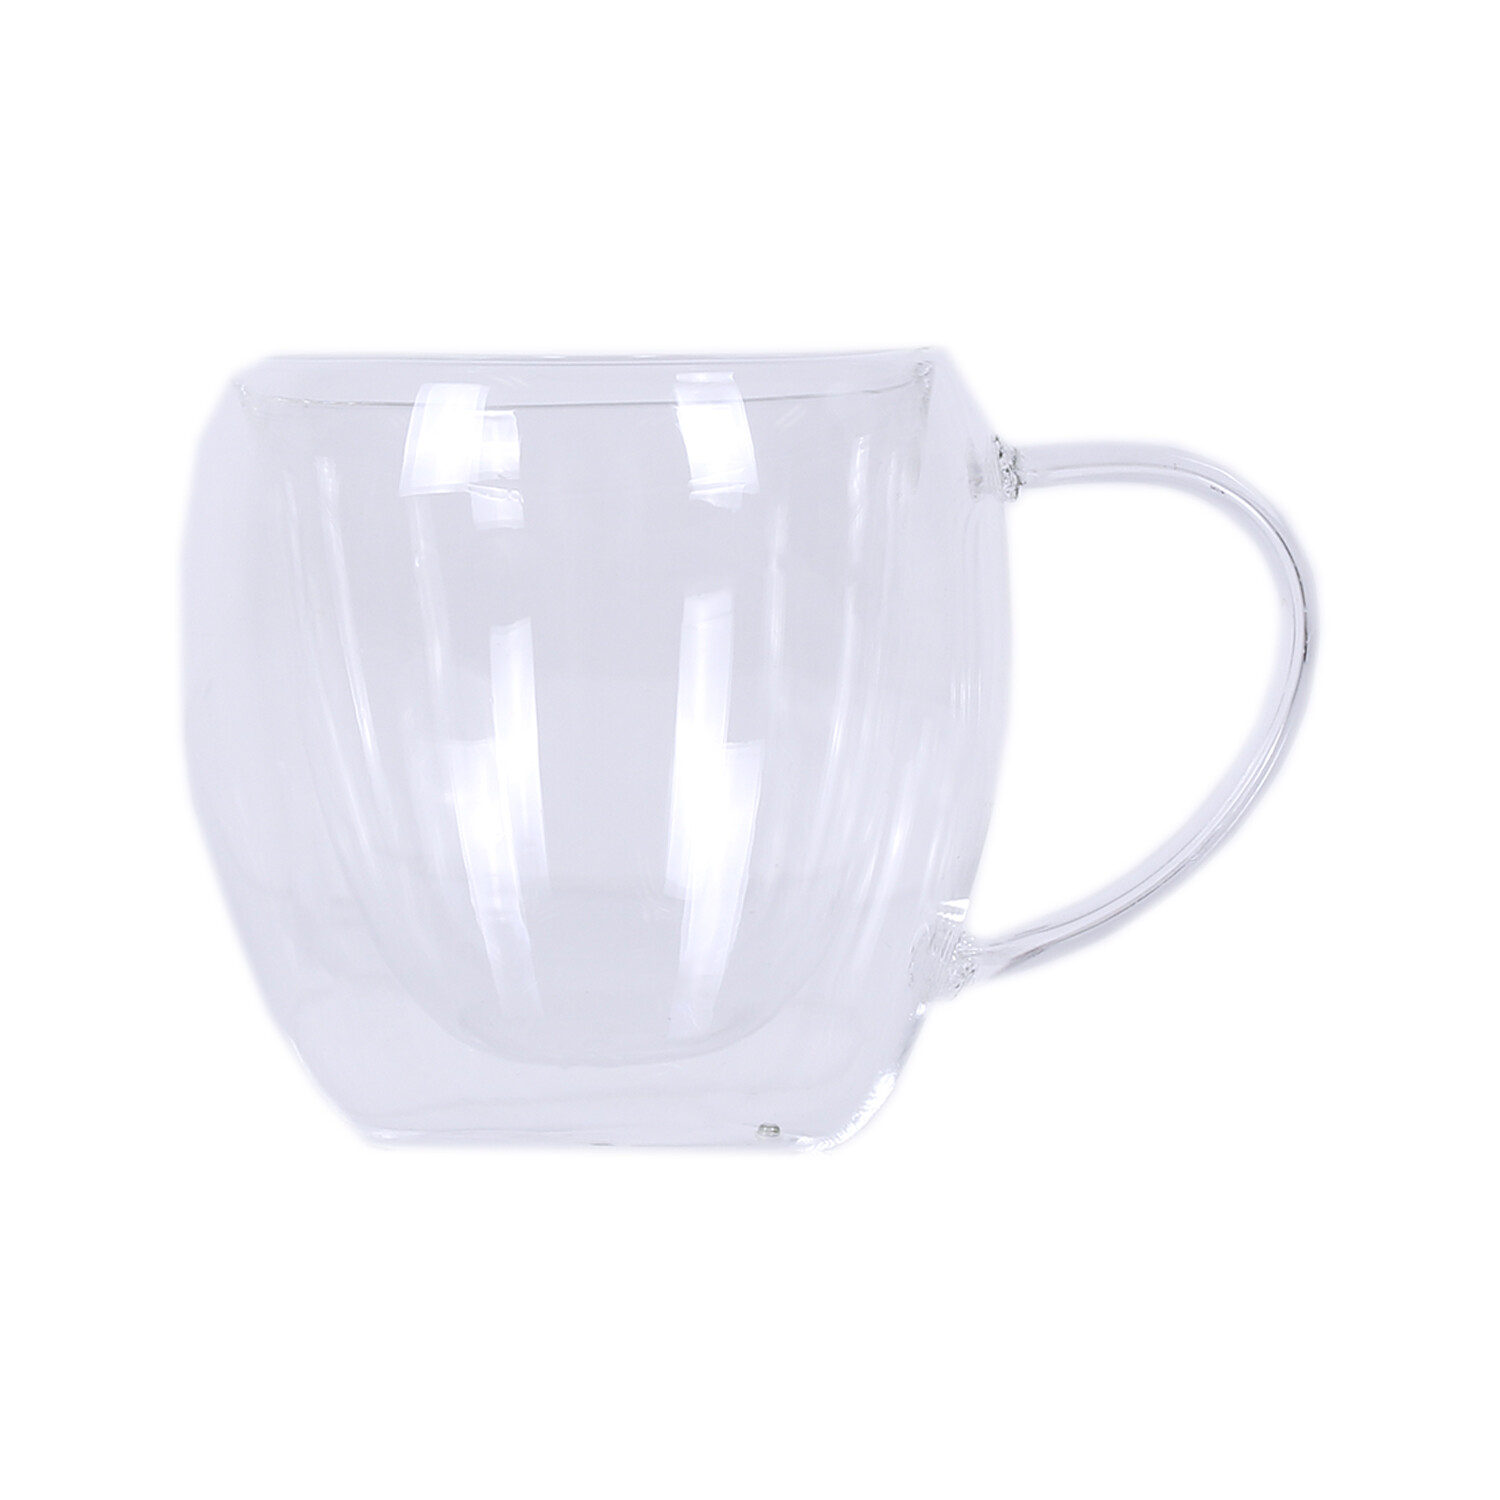 Double Walled Glass Mug 2 Pack Image